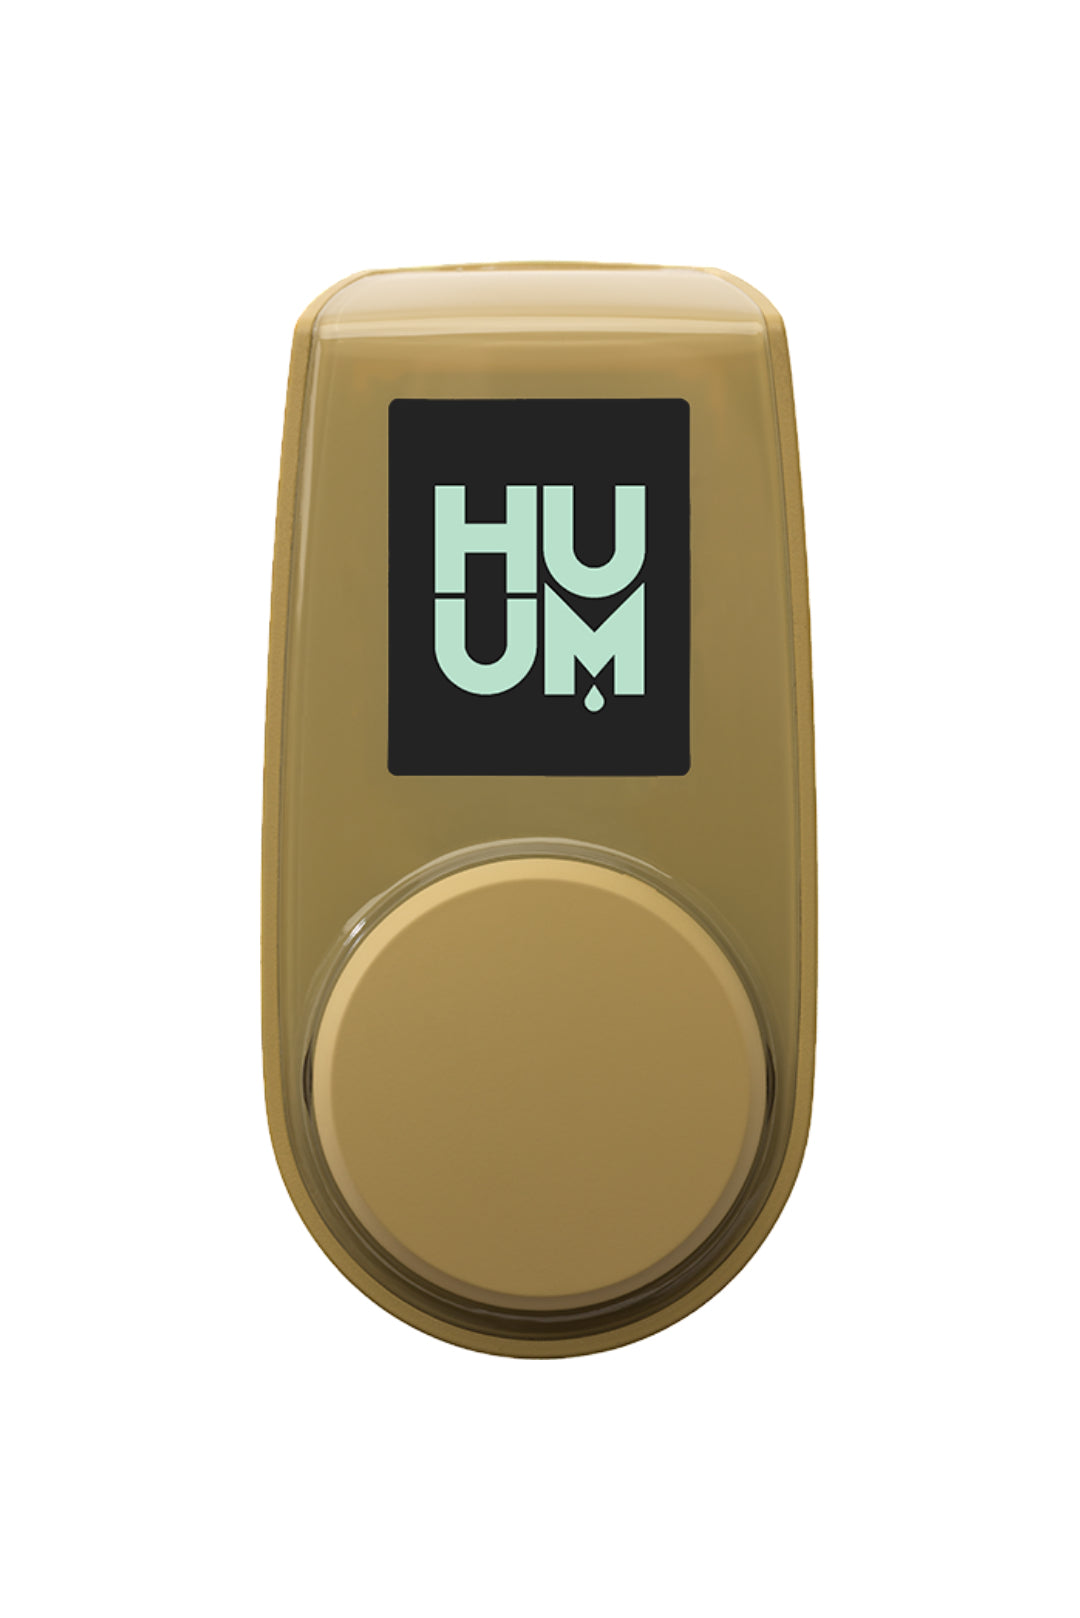 HUUM sauna control unit GSM in sand color